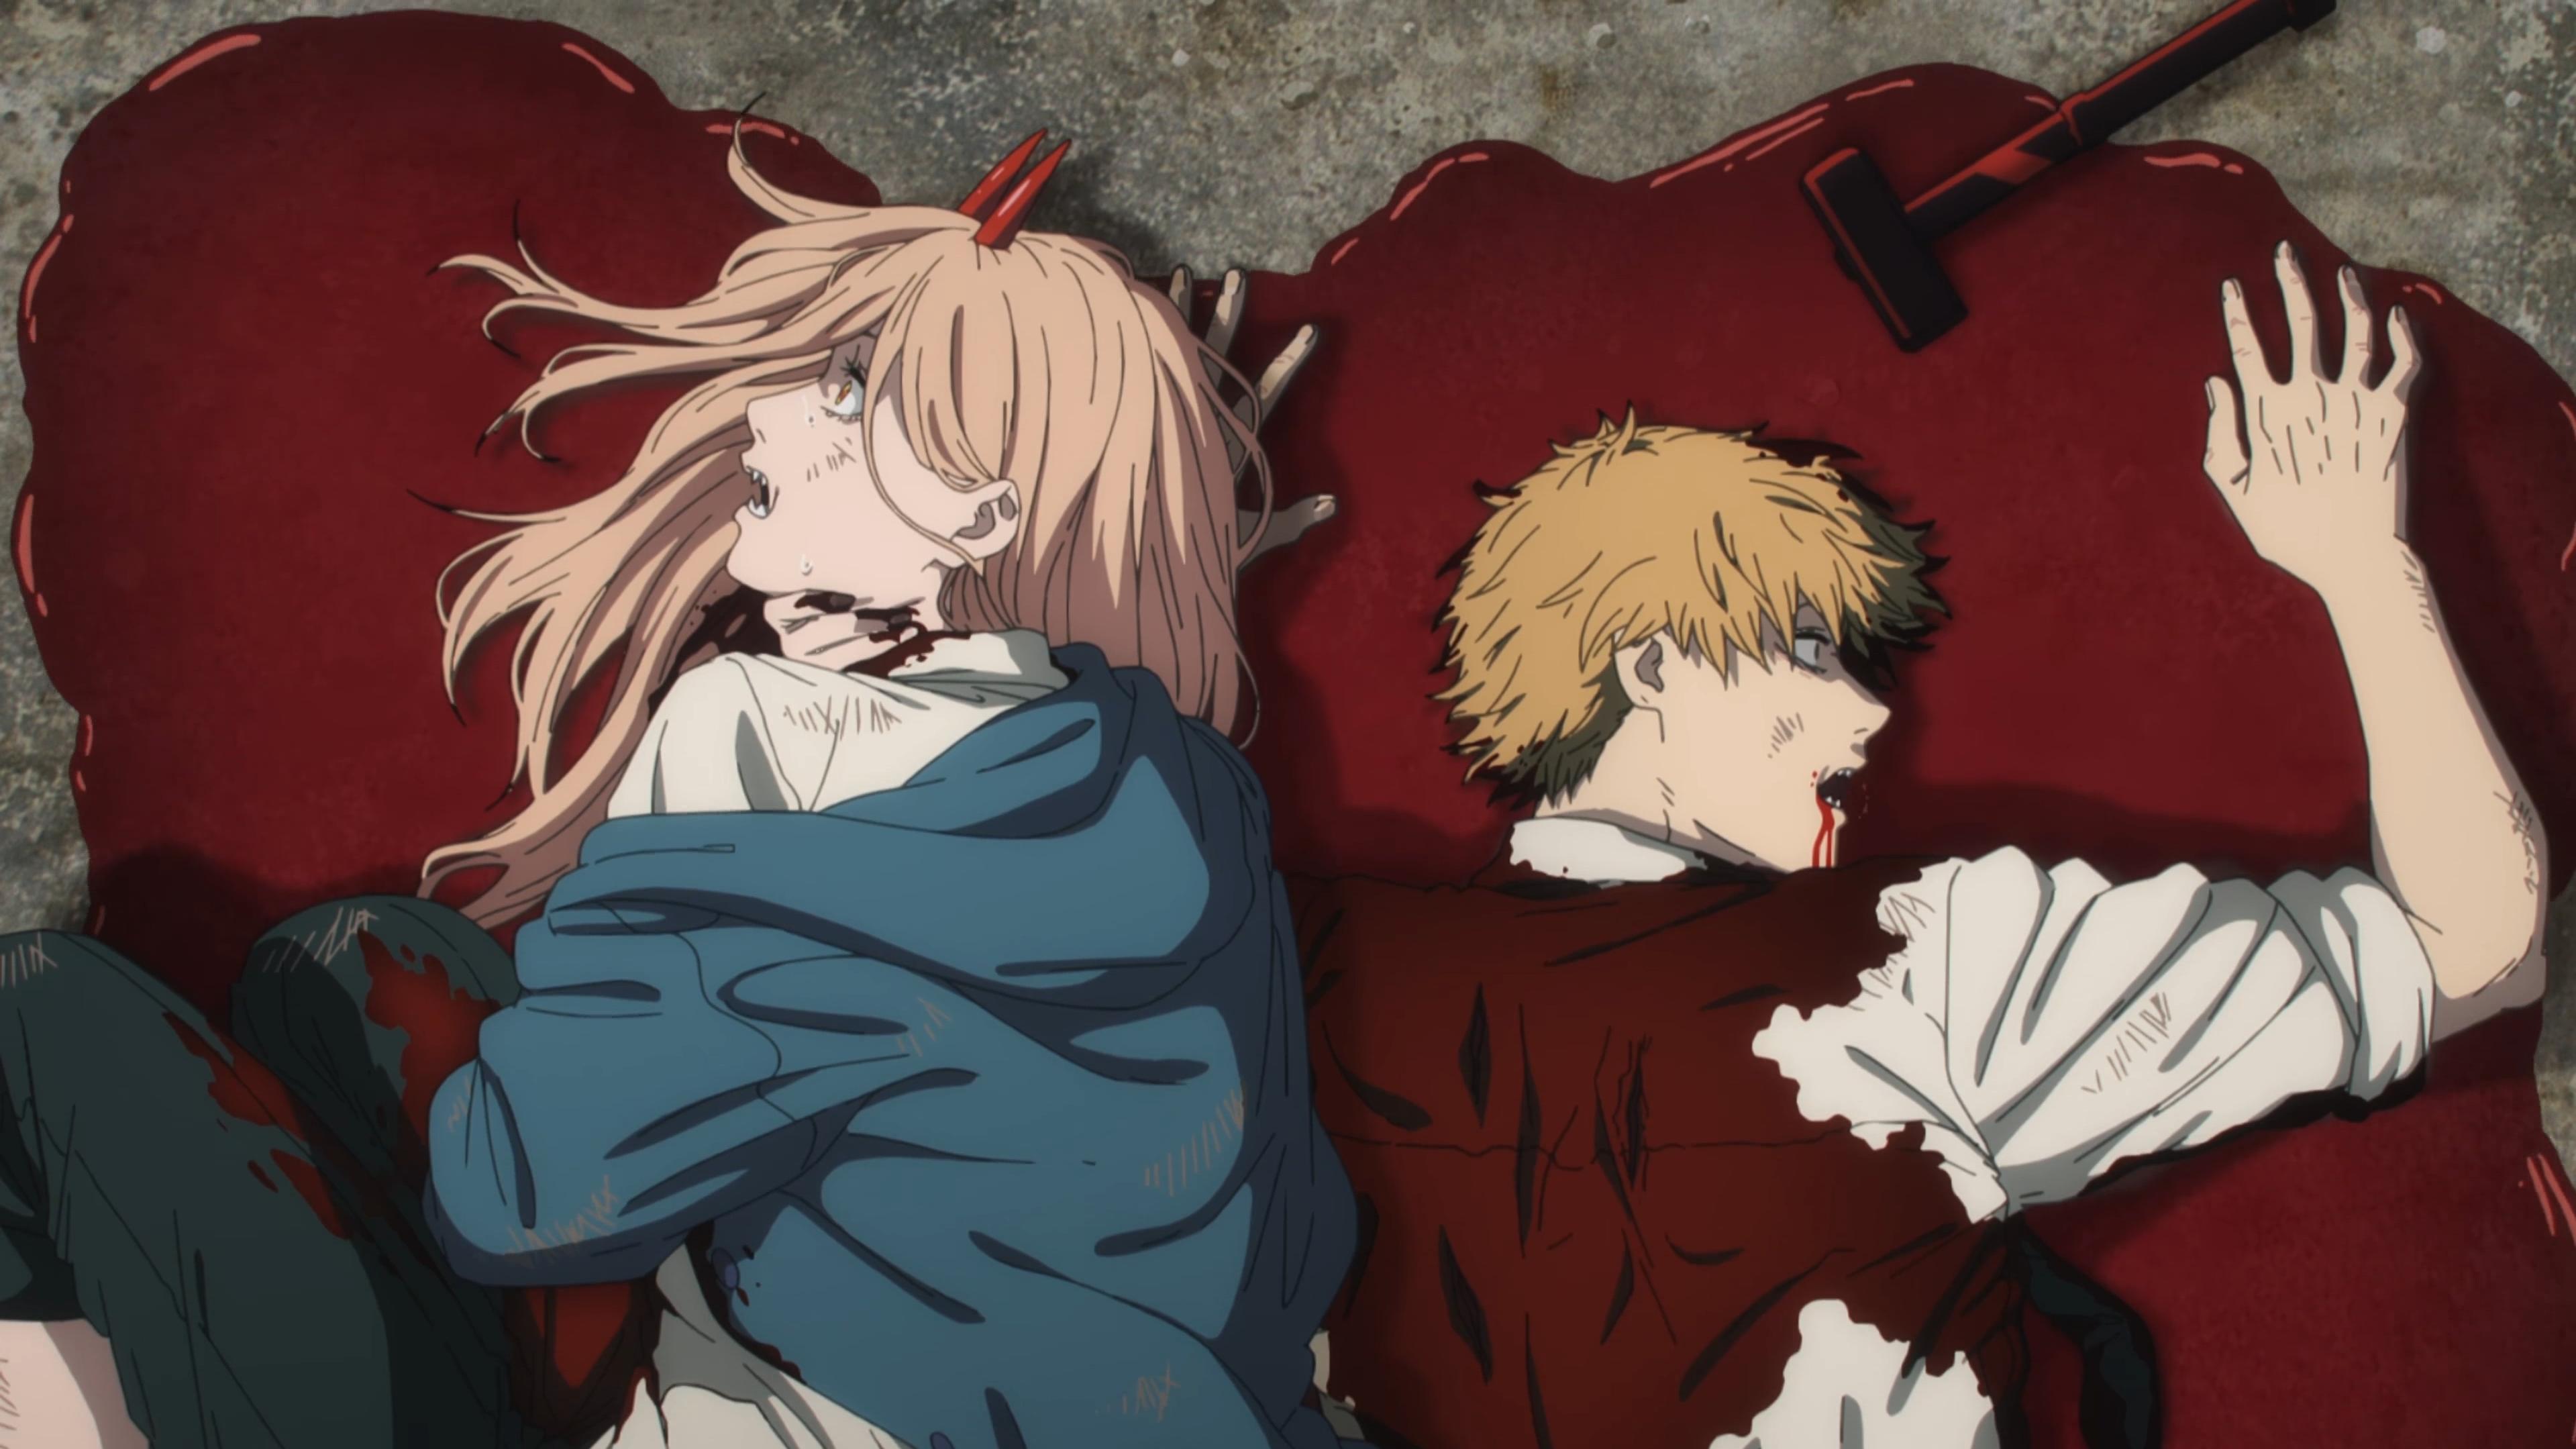 Kaguya-sama: Love Is War -Ultra Romantic- Episode #04 Anime Review